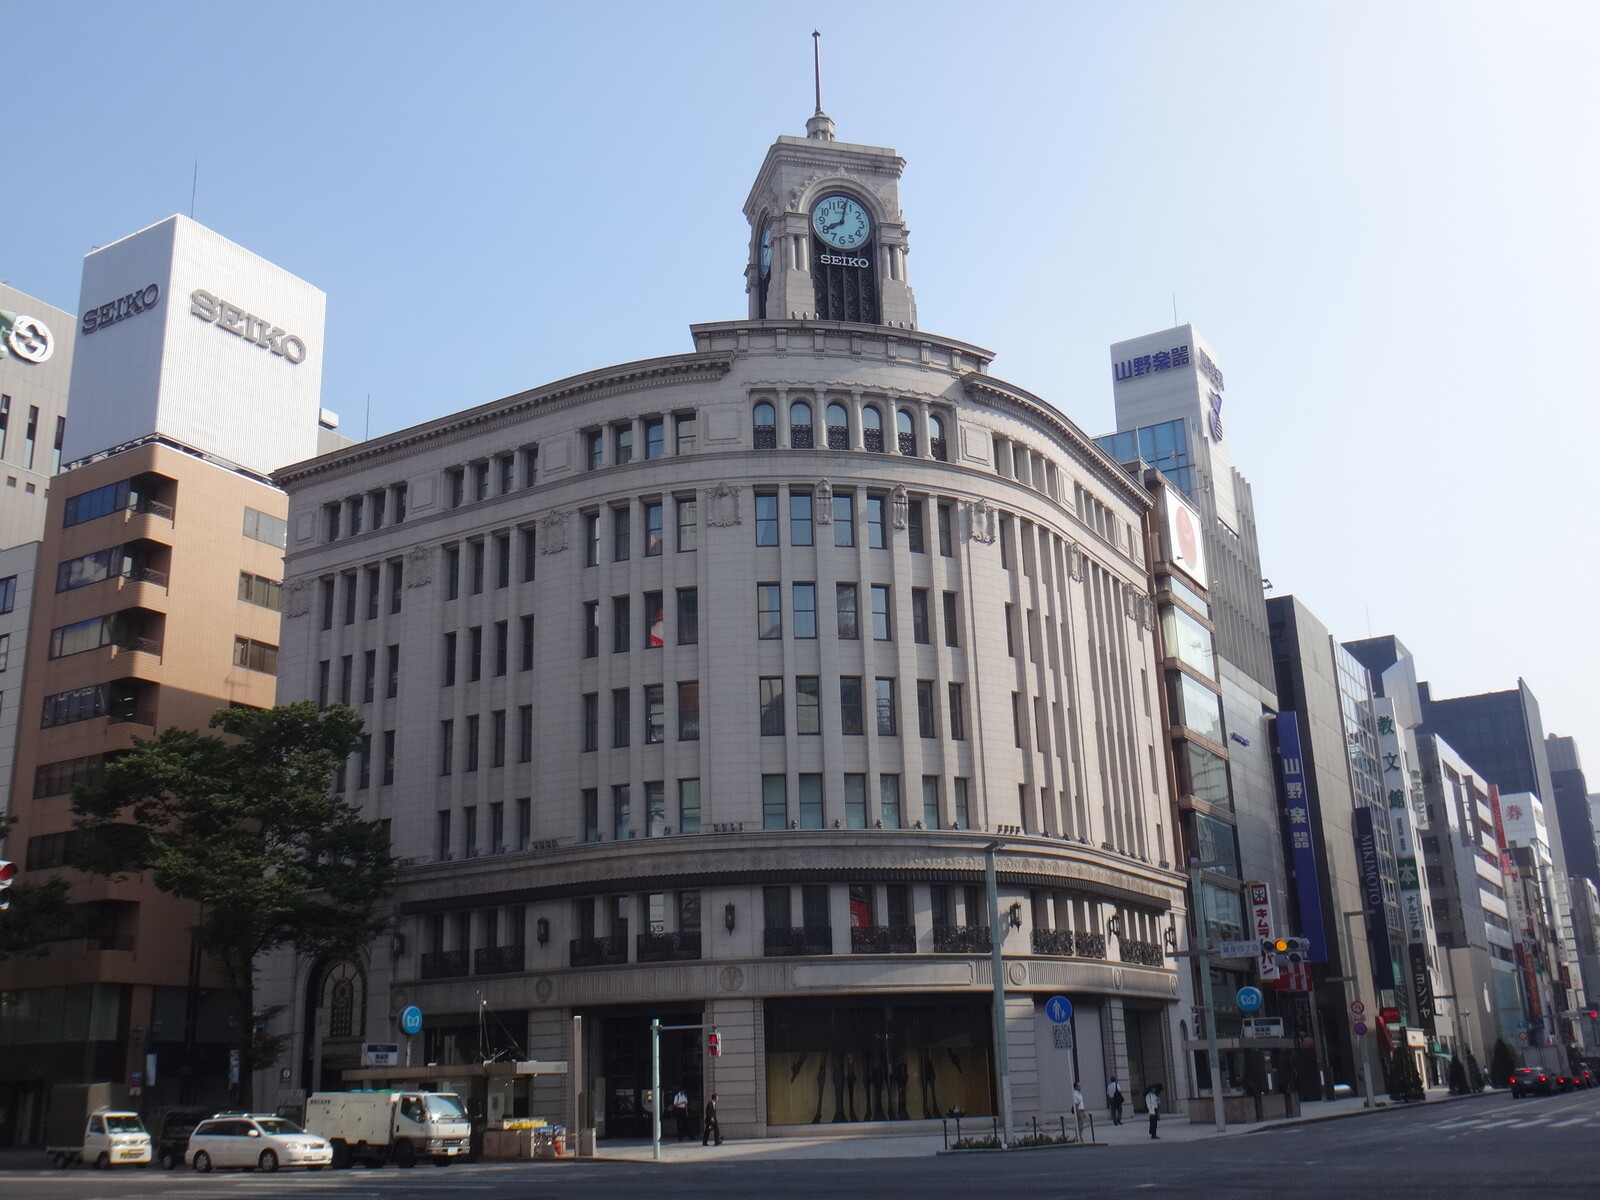 W.I.P. 1954 Godzilla Attack Tokyo Clock Tower Diorama 
https://www.solidart.club/